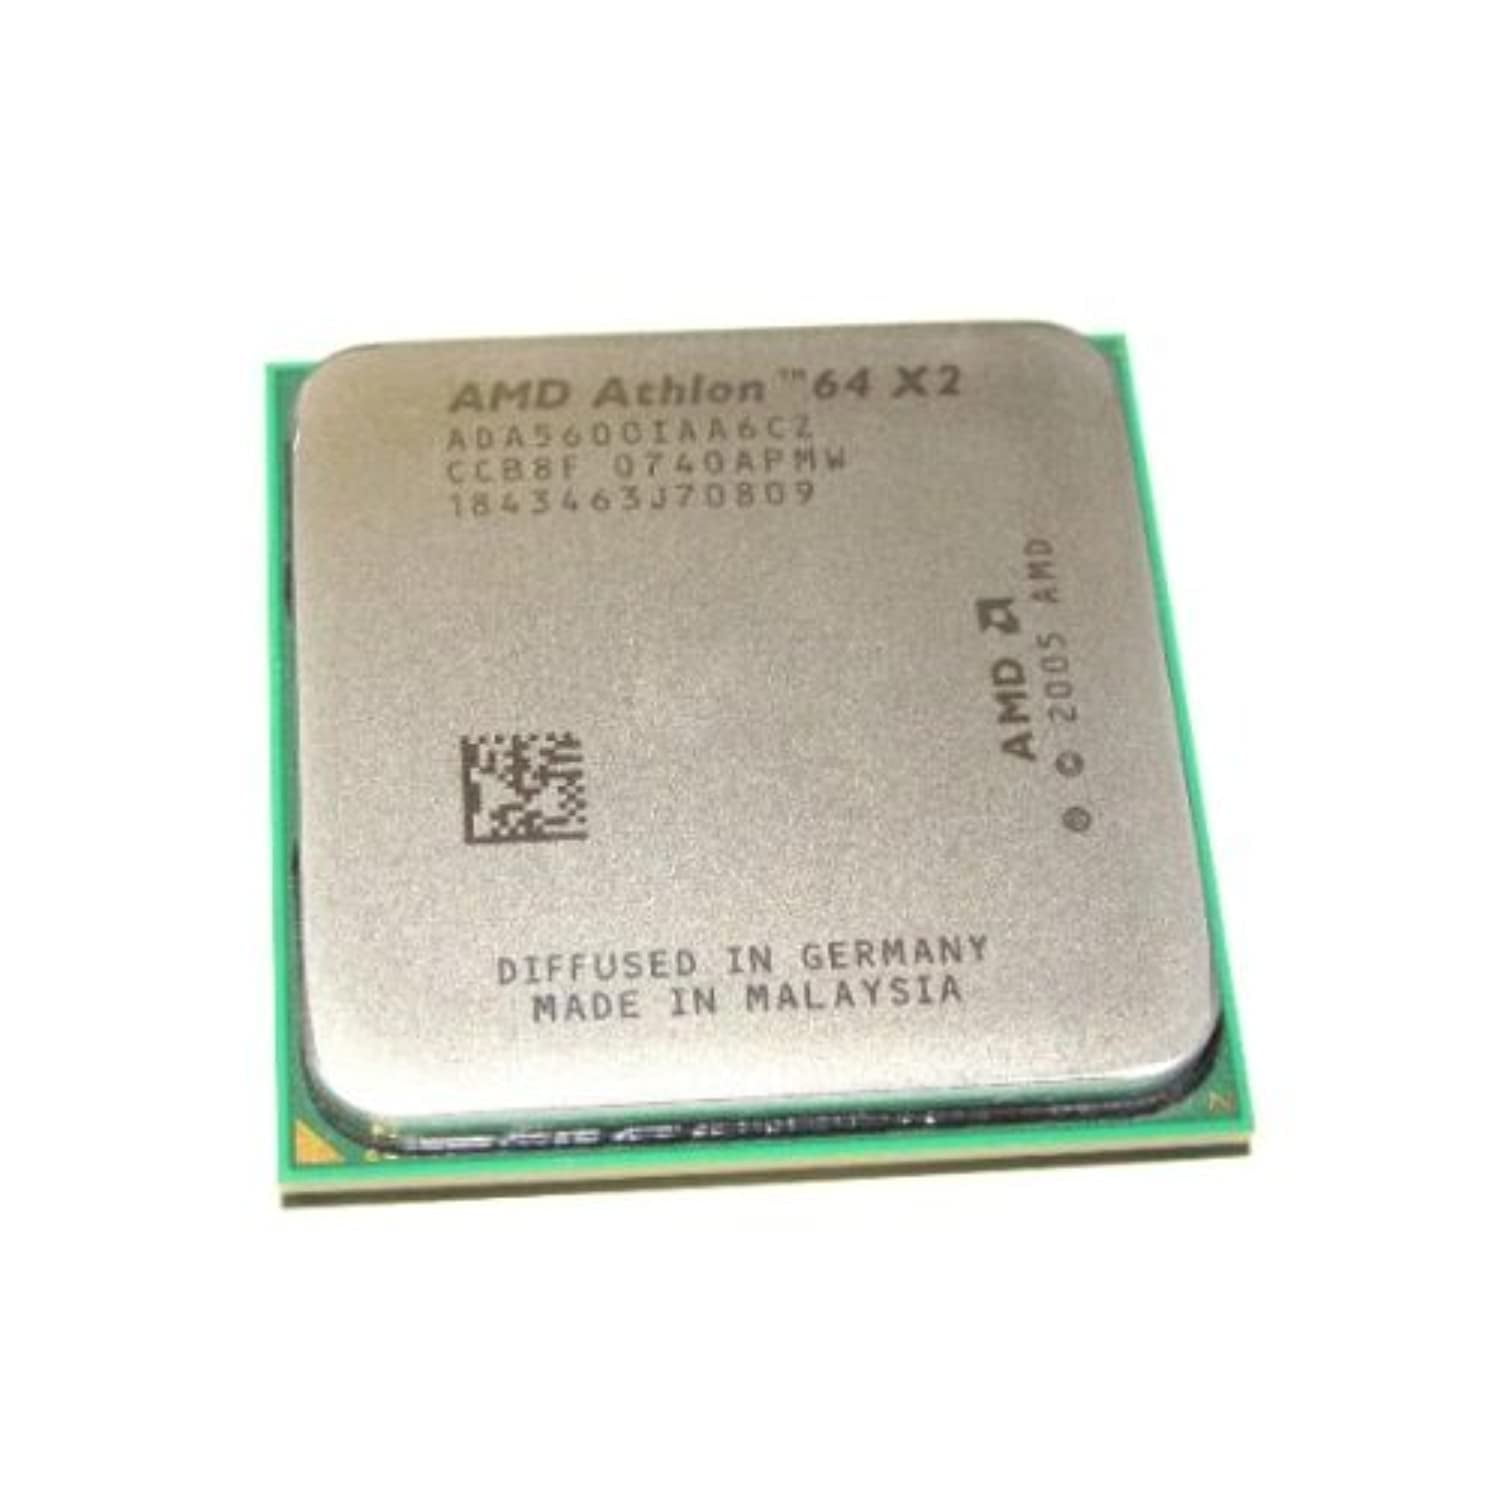 AMD Athlon 64 x2 ada5600iaa6cz. AMD Athlon 64 x2 5000+. AMD Athlon 64 2001 процессор. AMD Athlon 64 x2 корпус.